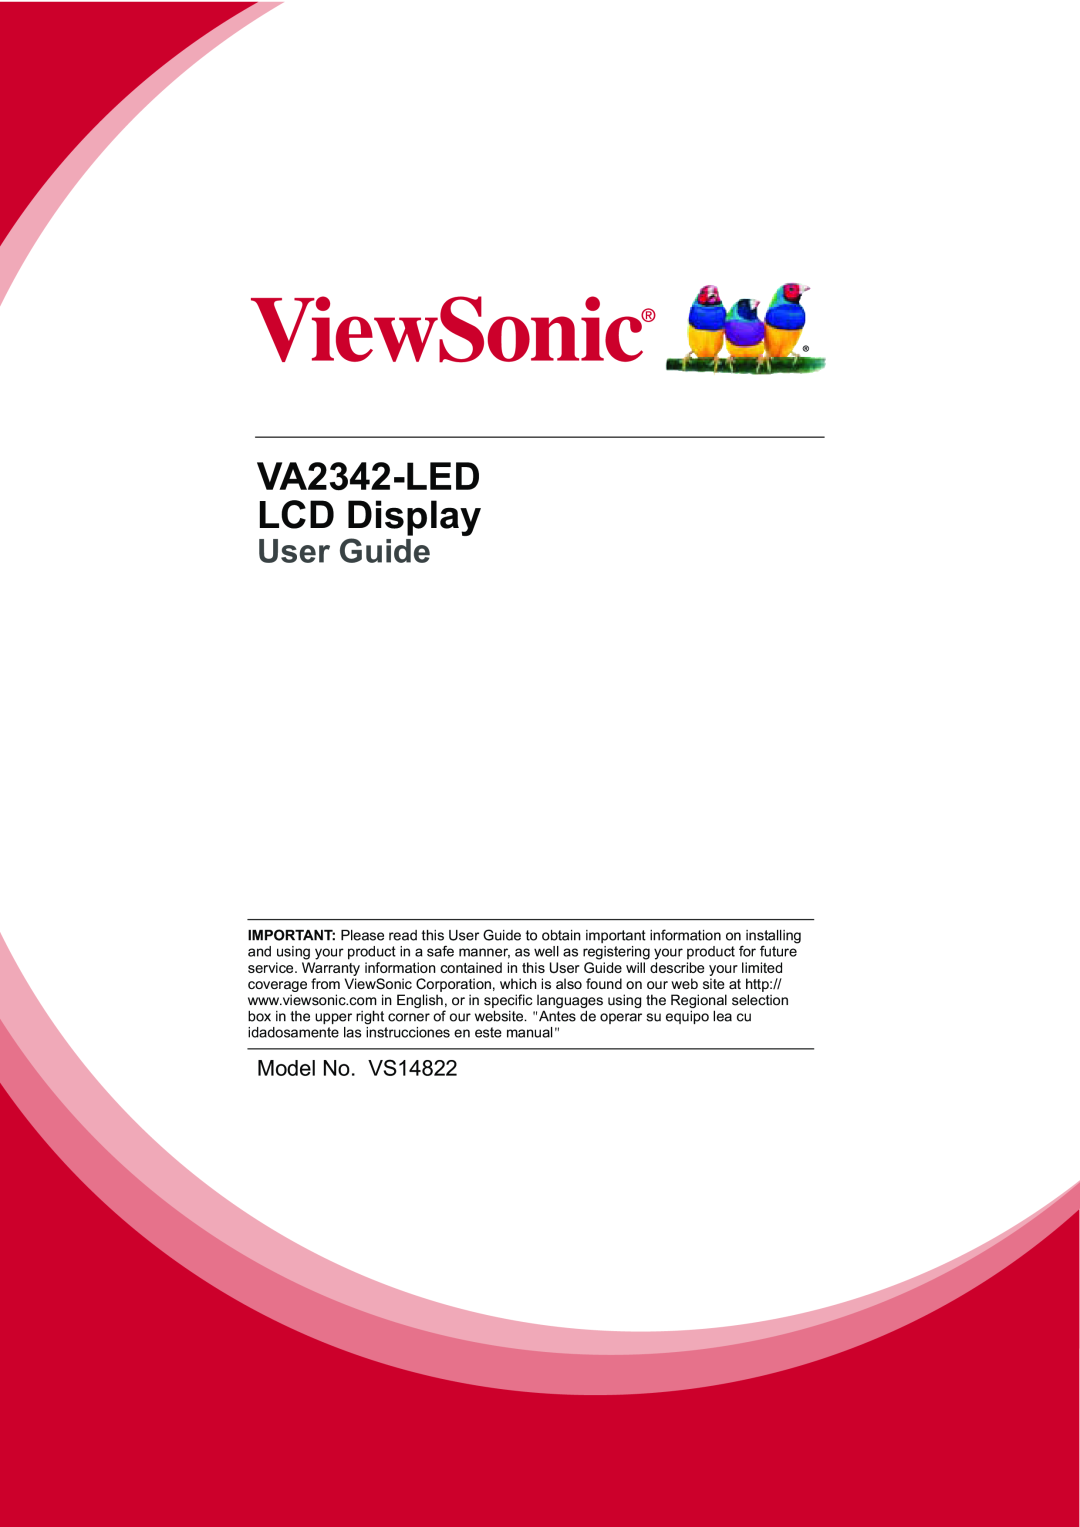 ViewSonic warranty VA2342-LED LCD Display, User Guide 